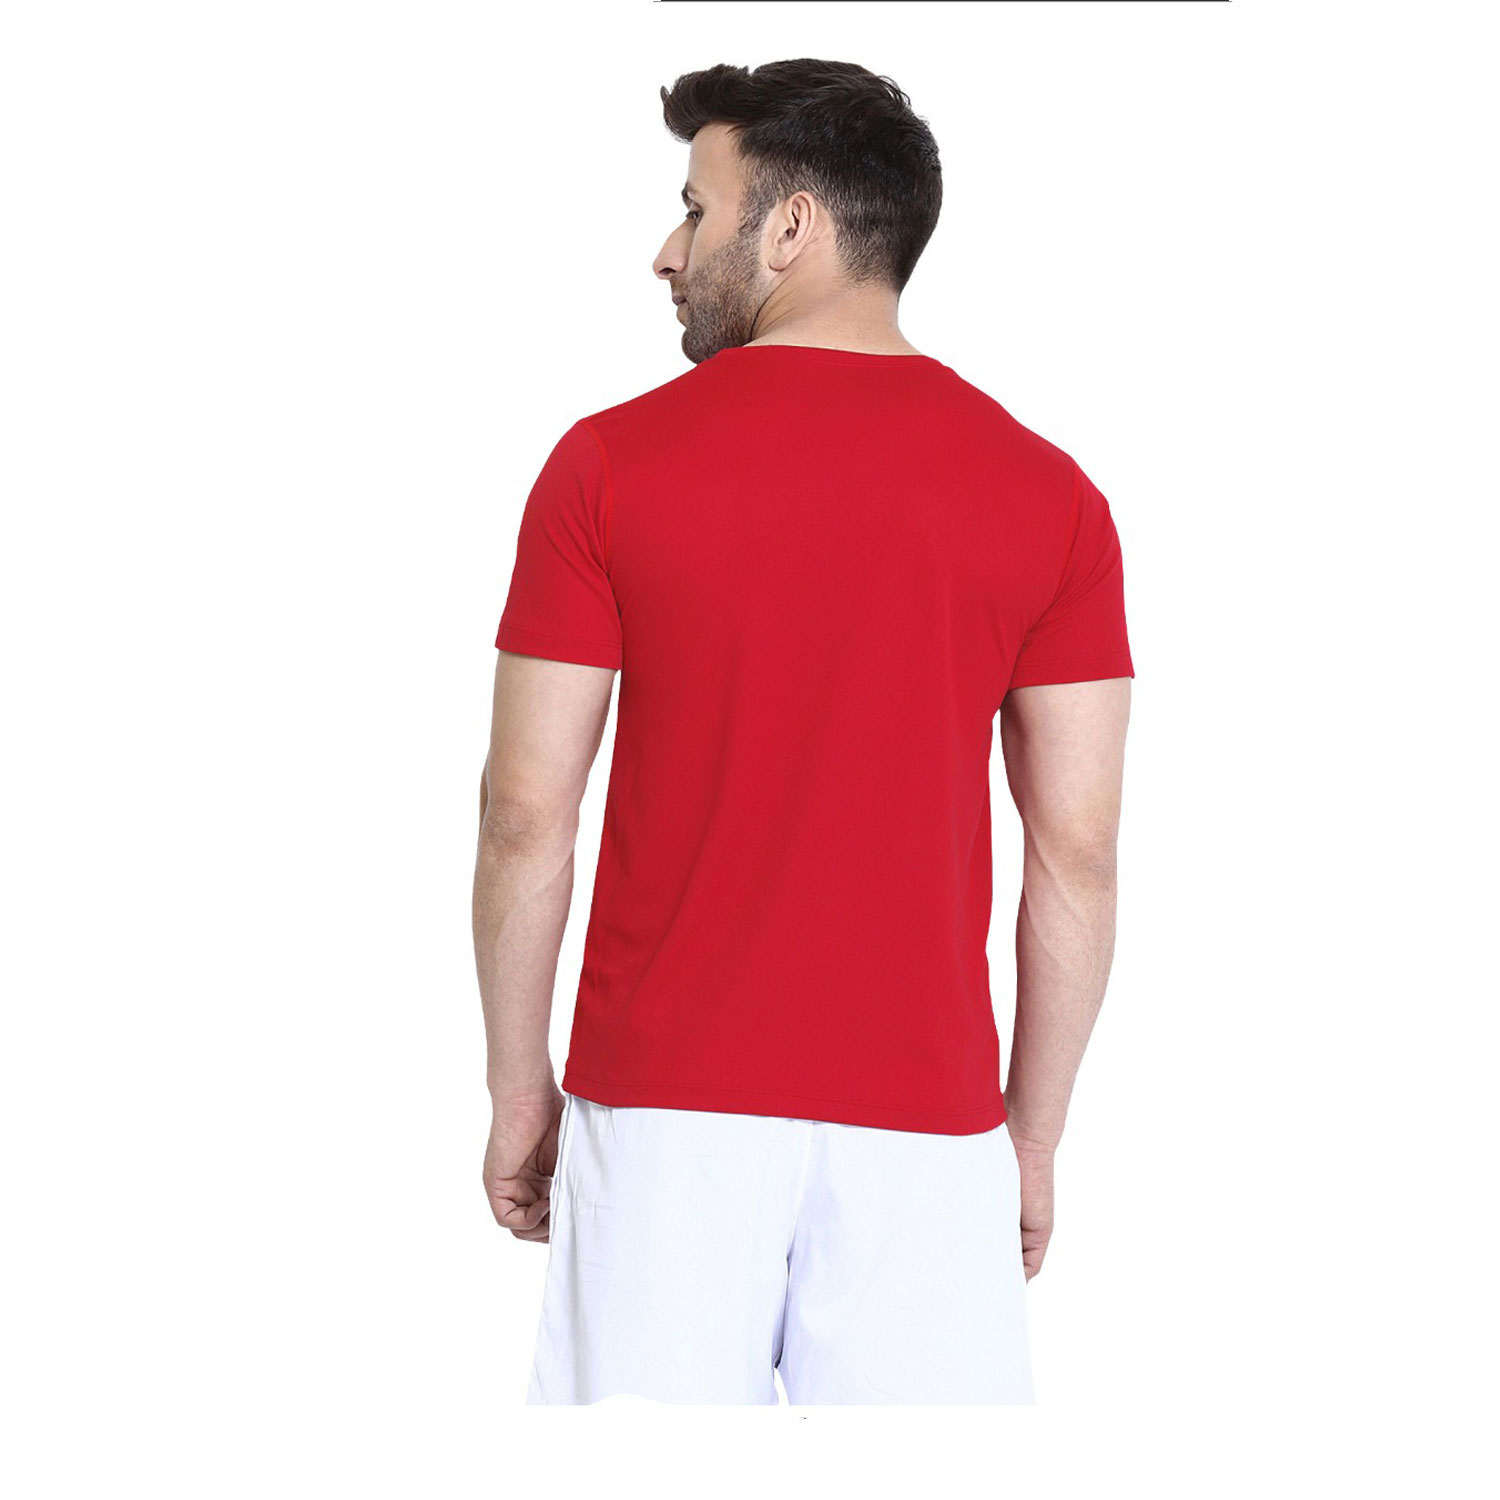 WYTEFORT Cotton T- Shirt For Men's | Size - L 